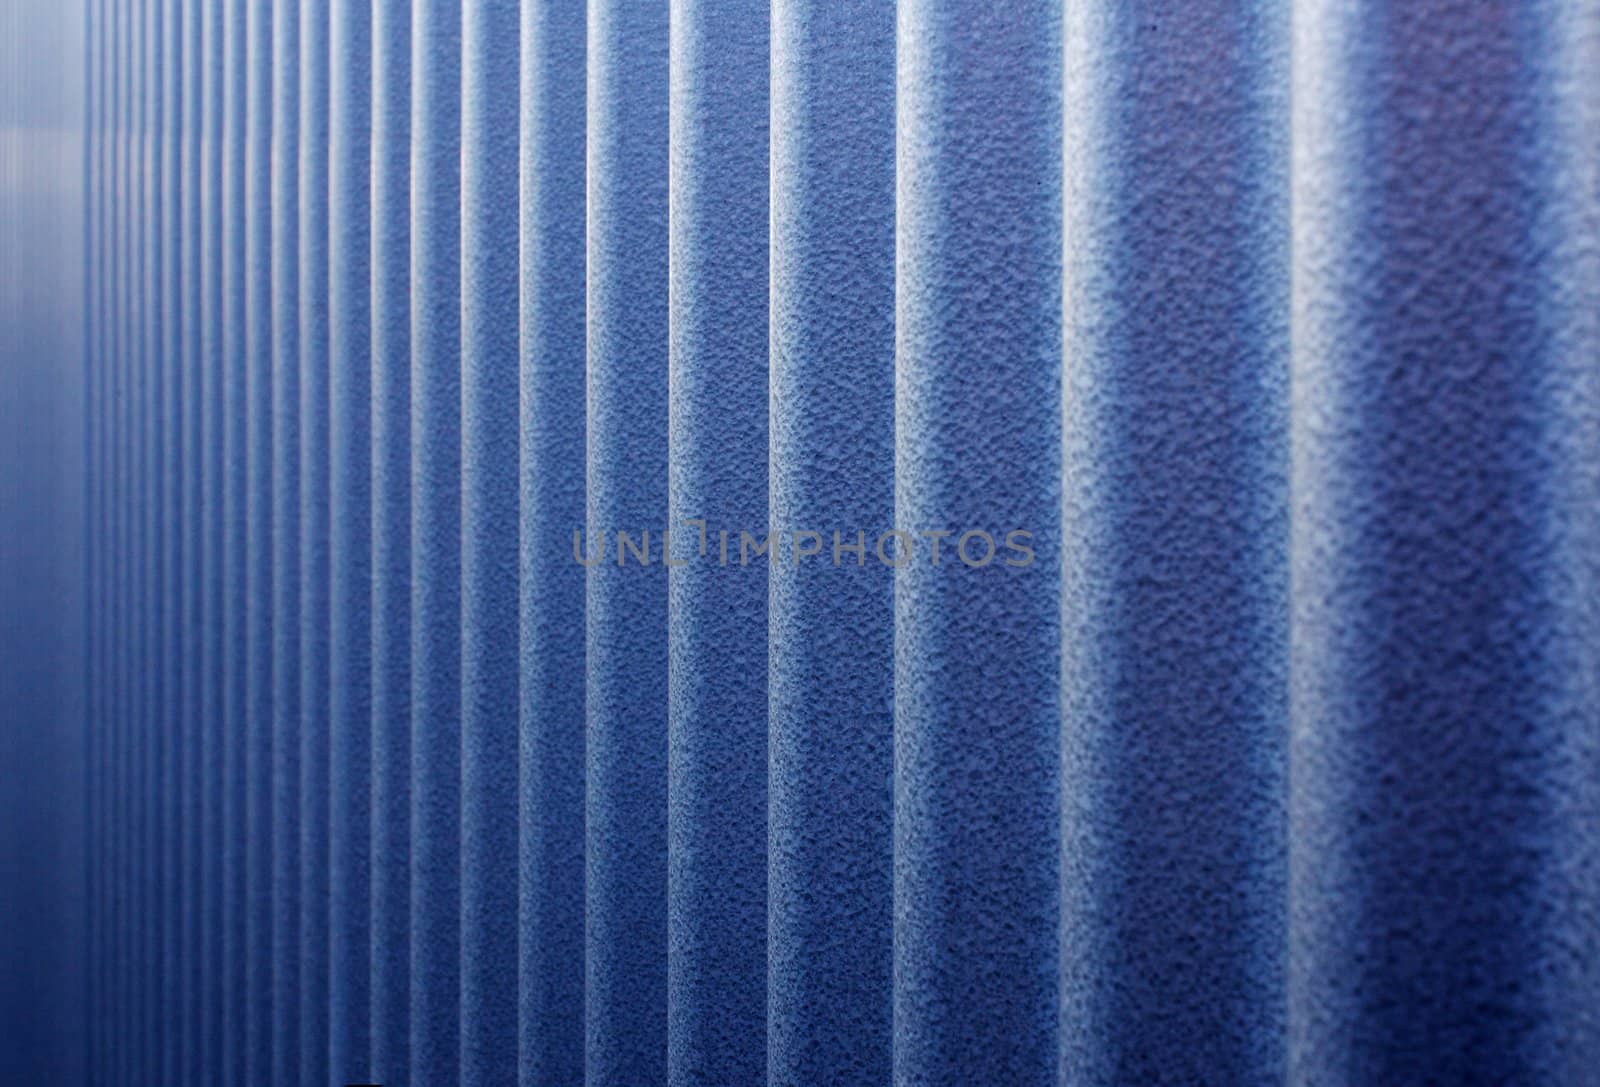 Corrugated Infinity by bobkeenan